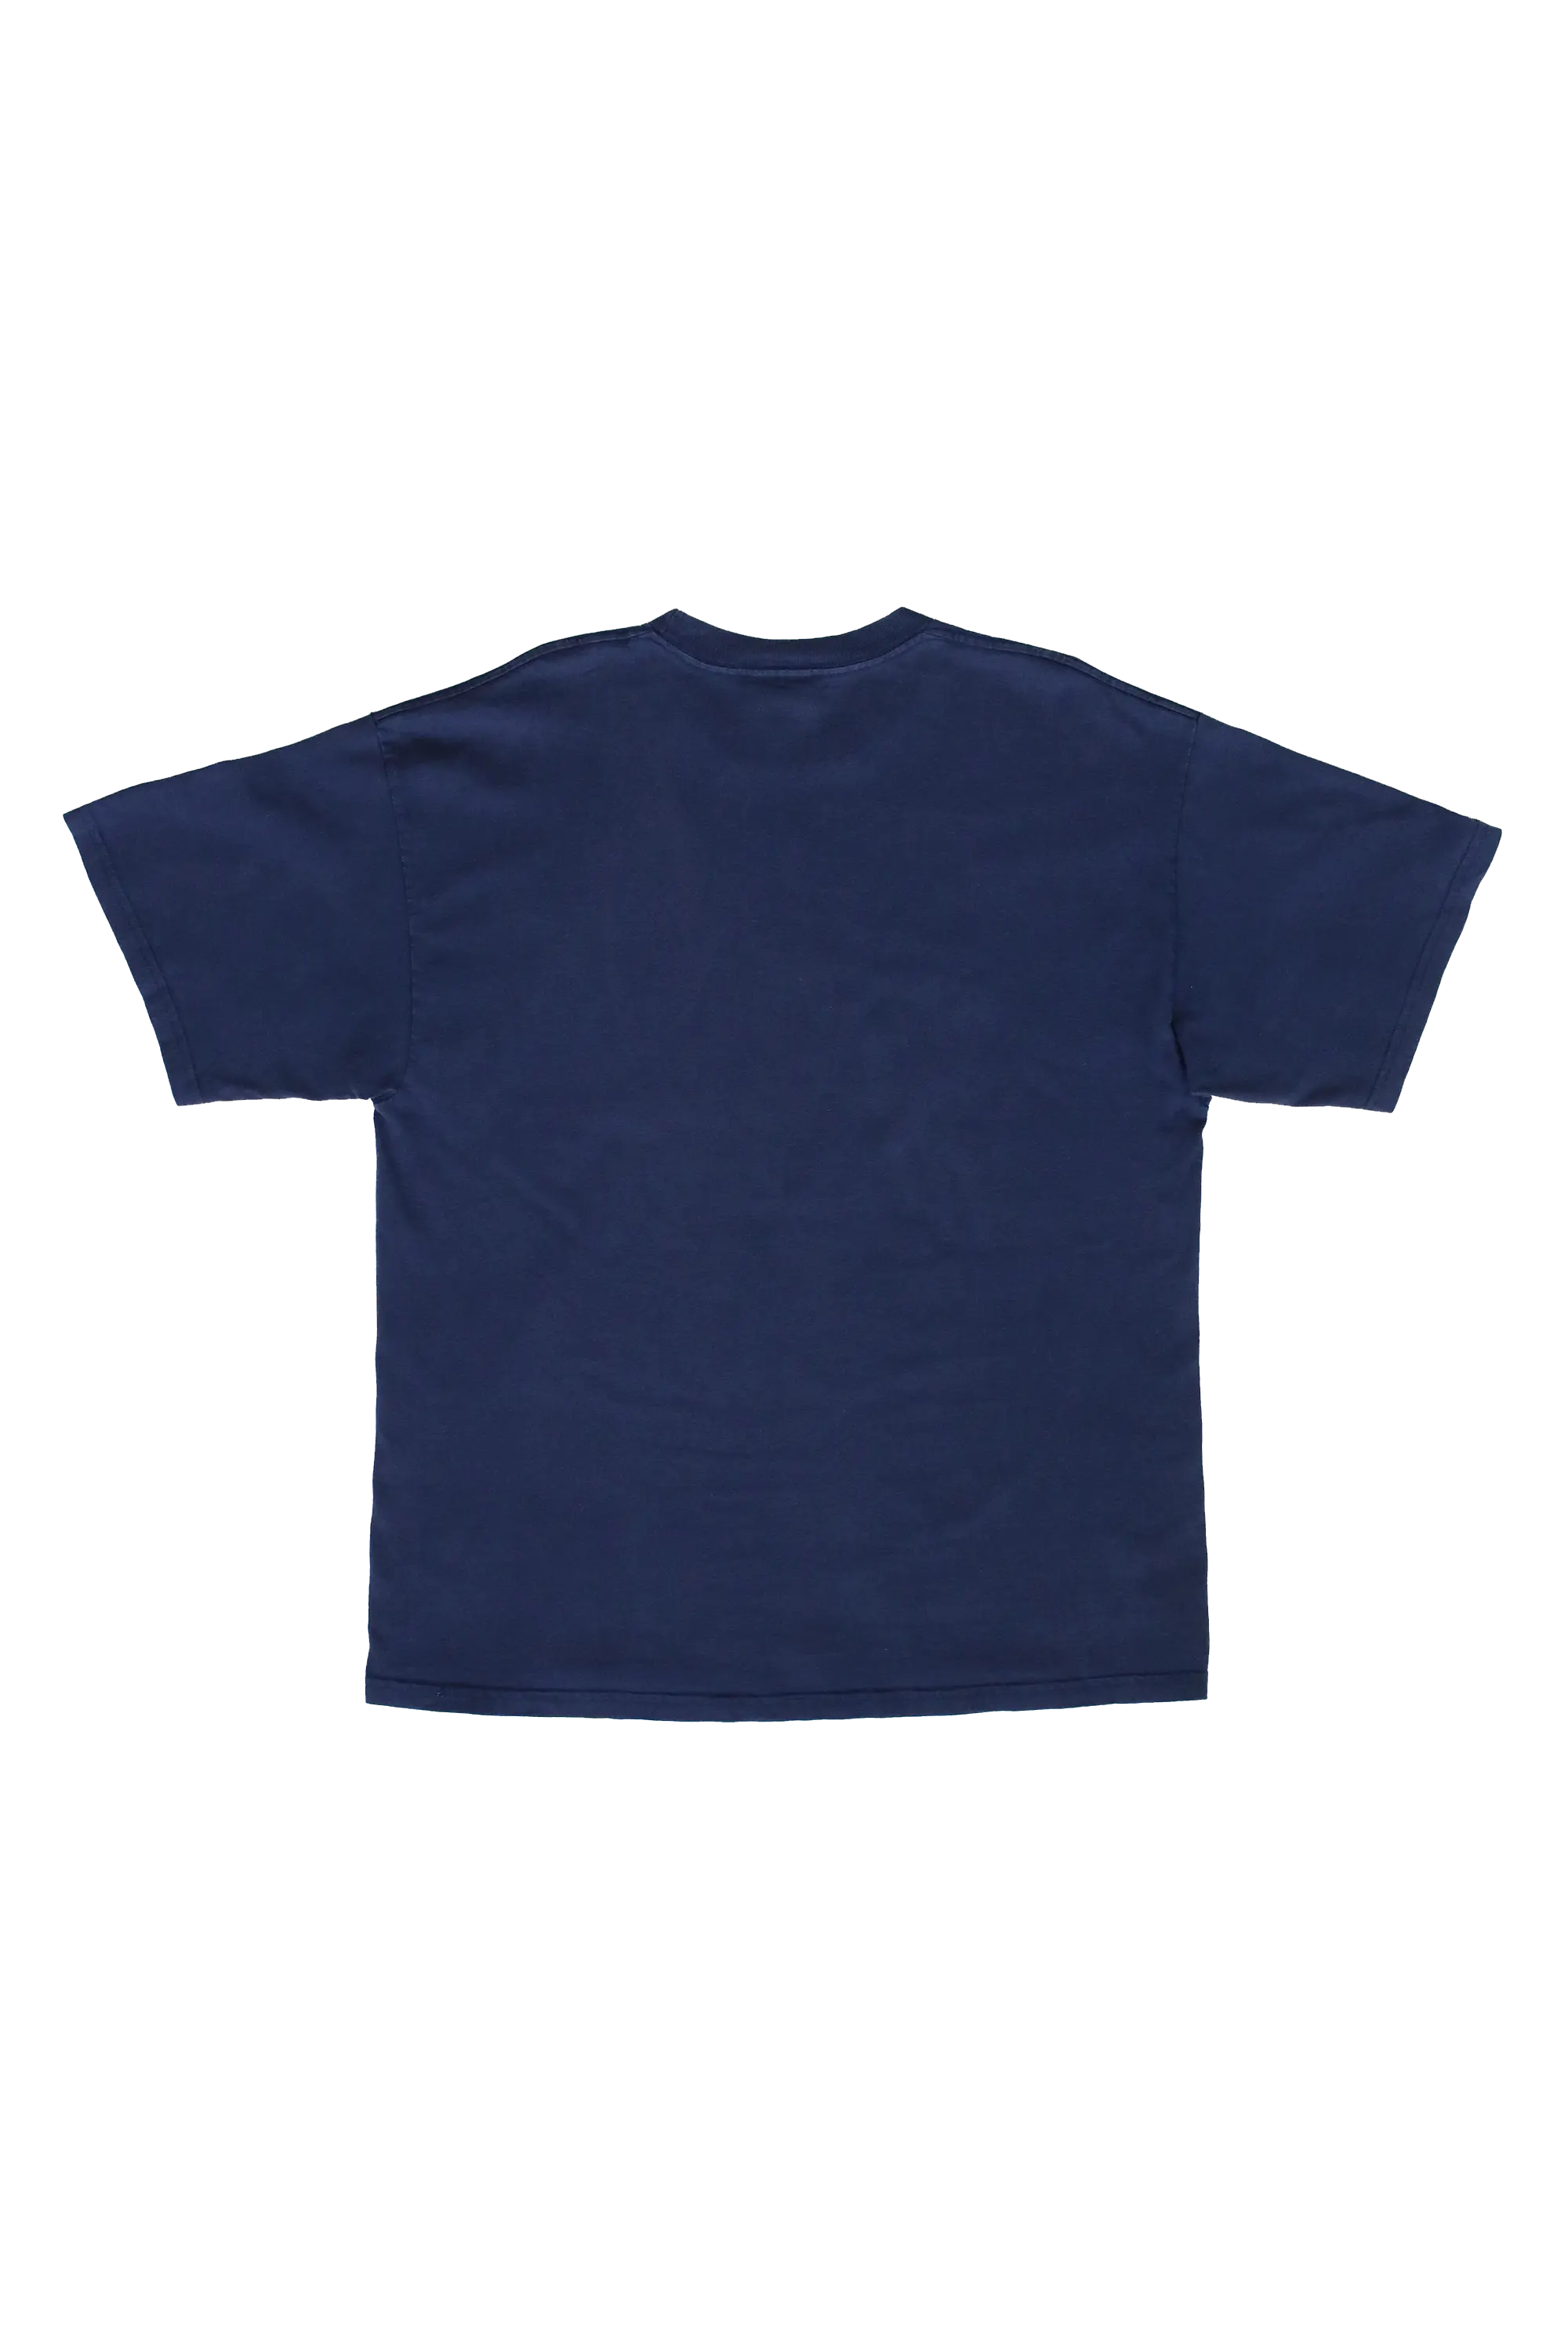 Superbowl '01 T-Shirt